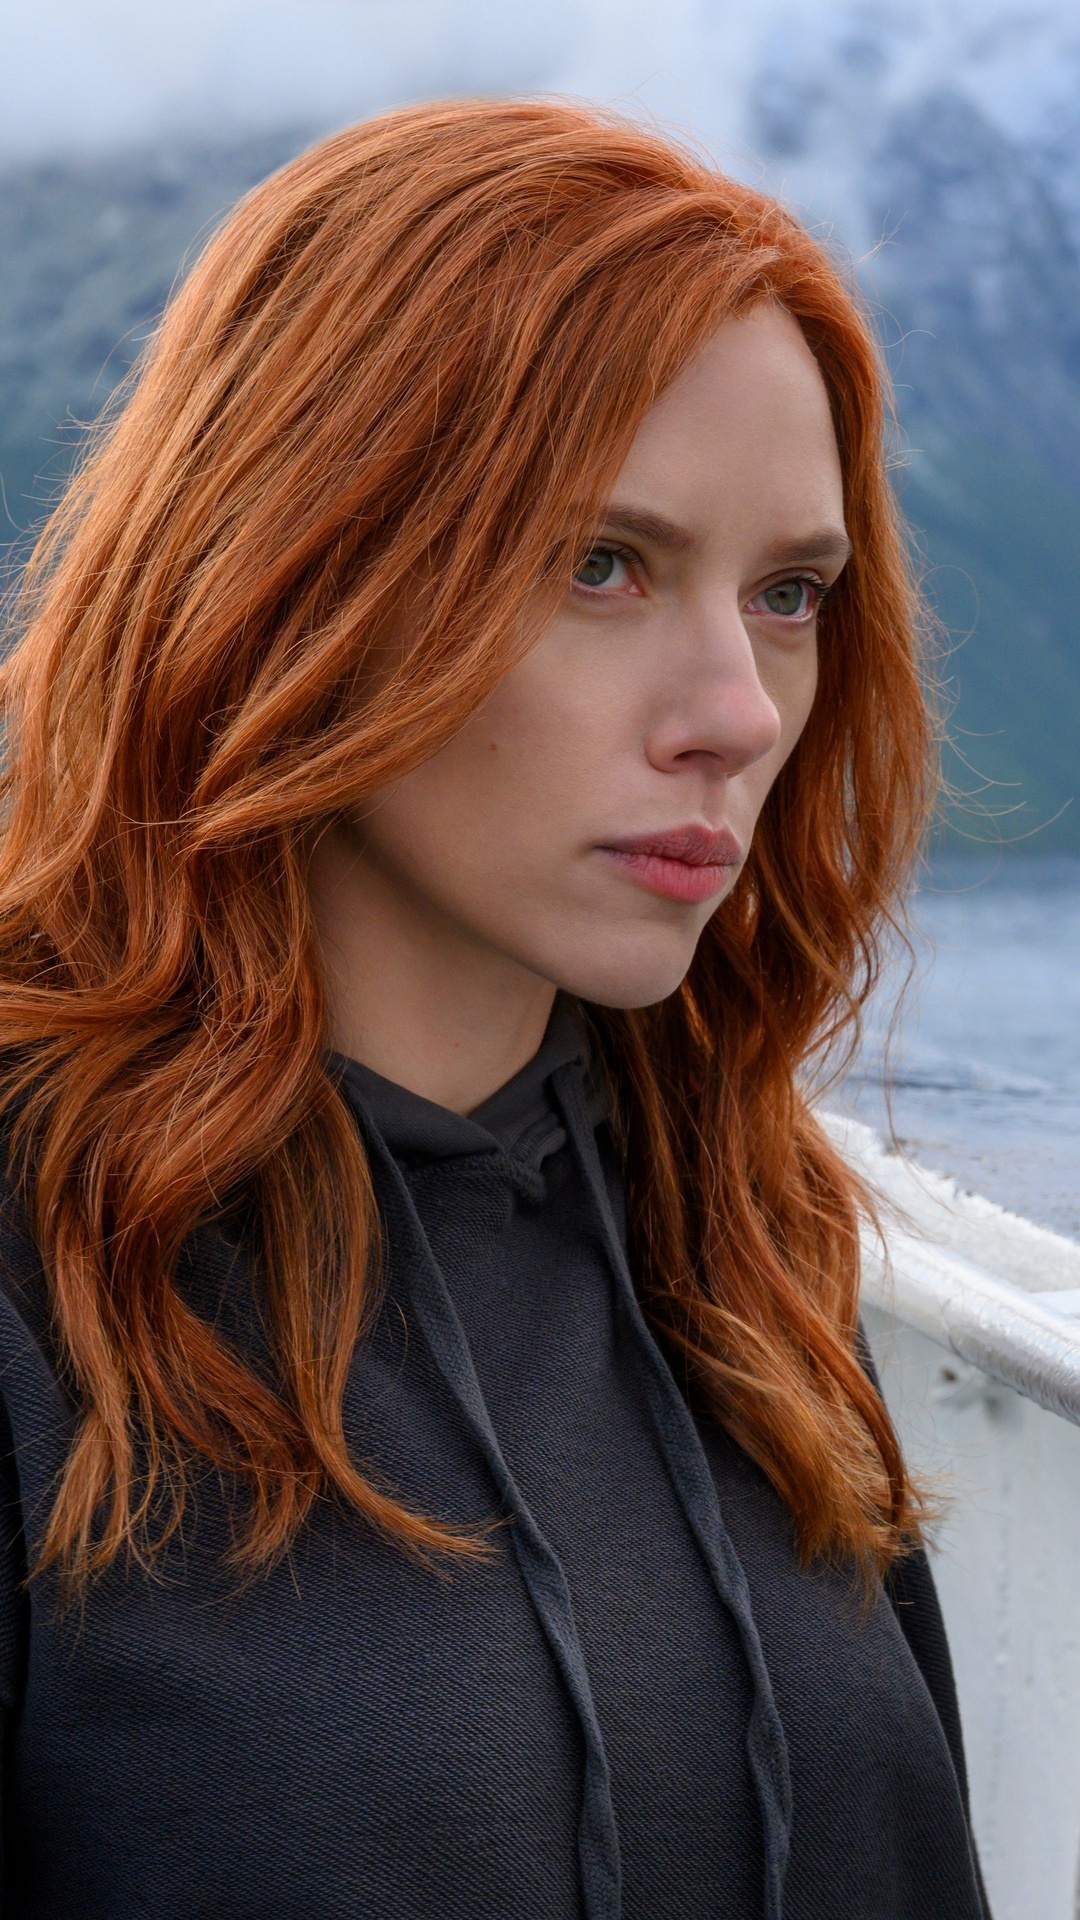 Scarlett Johansson: Starred as Natasha Romanoff, former agent of S.H.I.E.L.D, in Black Widow (2021). 1080x1920 Full HD Wallpaper.